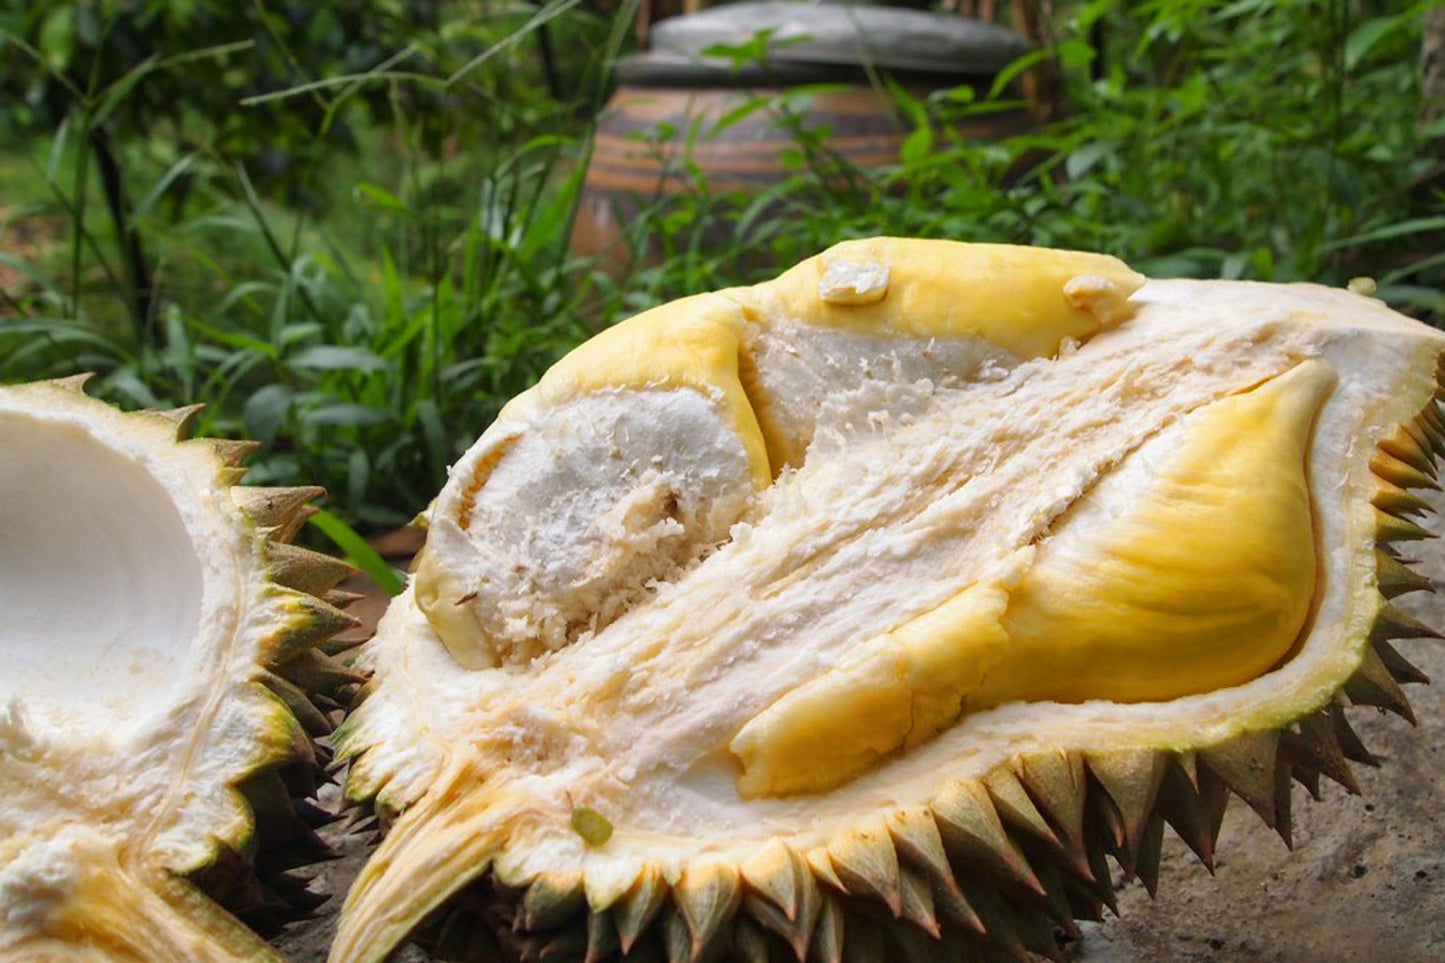 Nonthaburi durian Live Plants